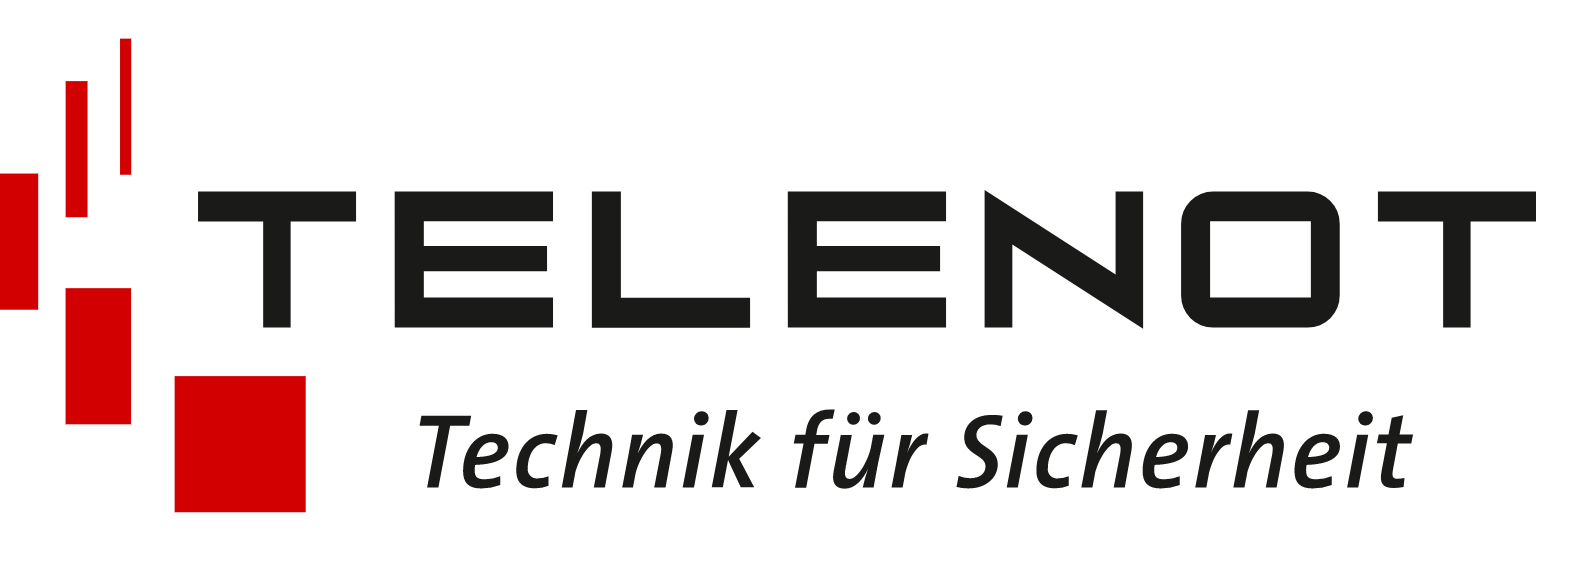 Telenot continues sponsorship of International Ski Federation World Cups